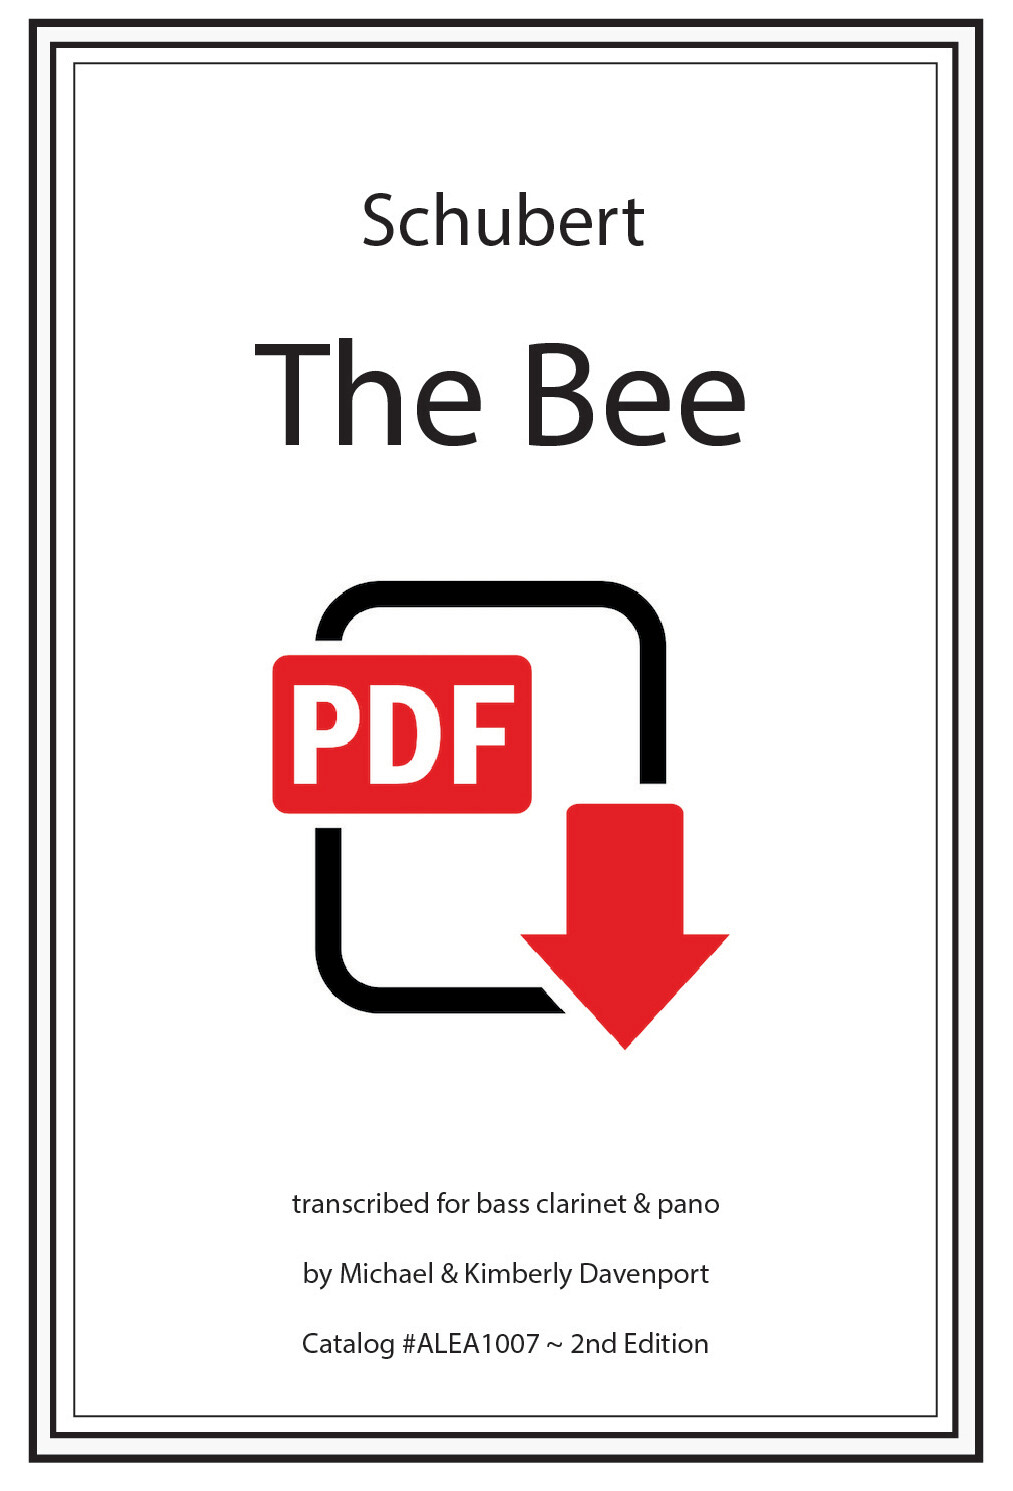 Schubert: The Bee (PDF)